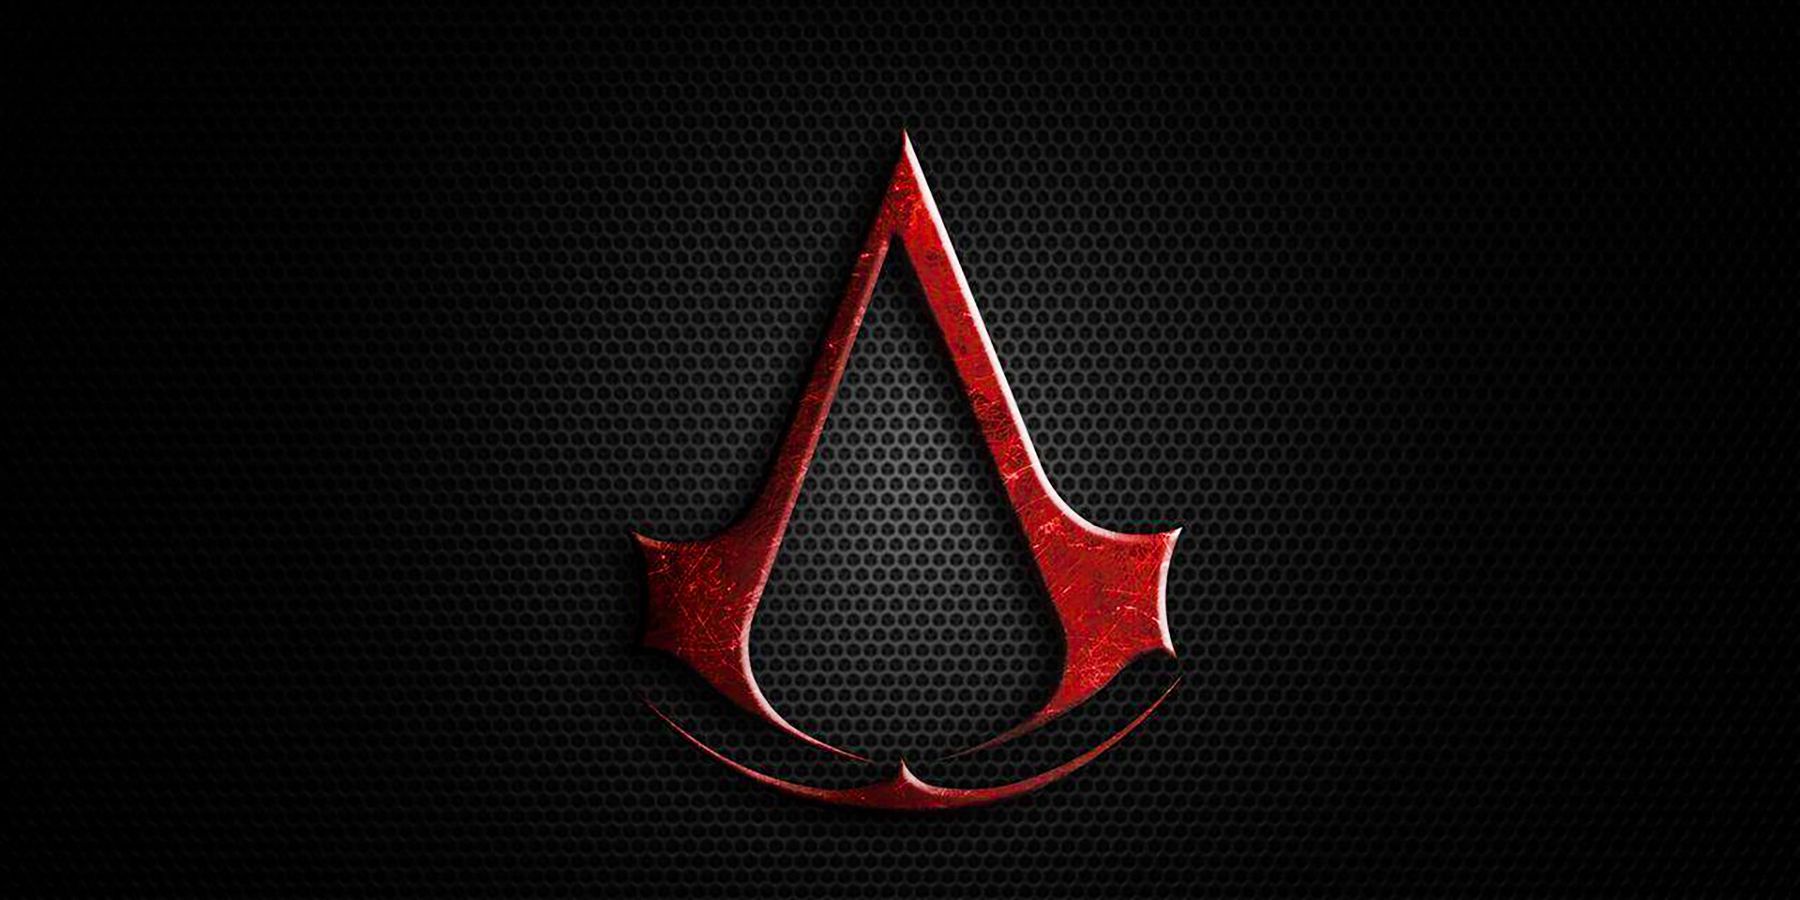 New Assassin’s Creed Game -instelling mogelijk gelekt